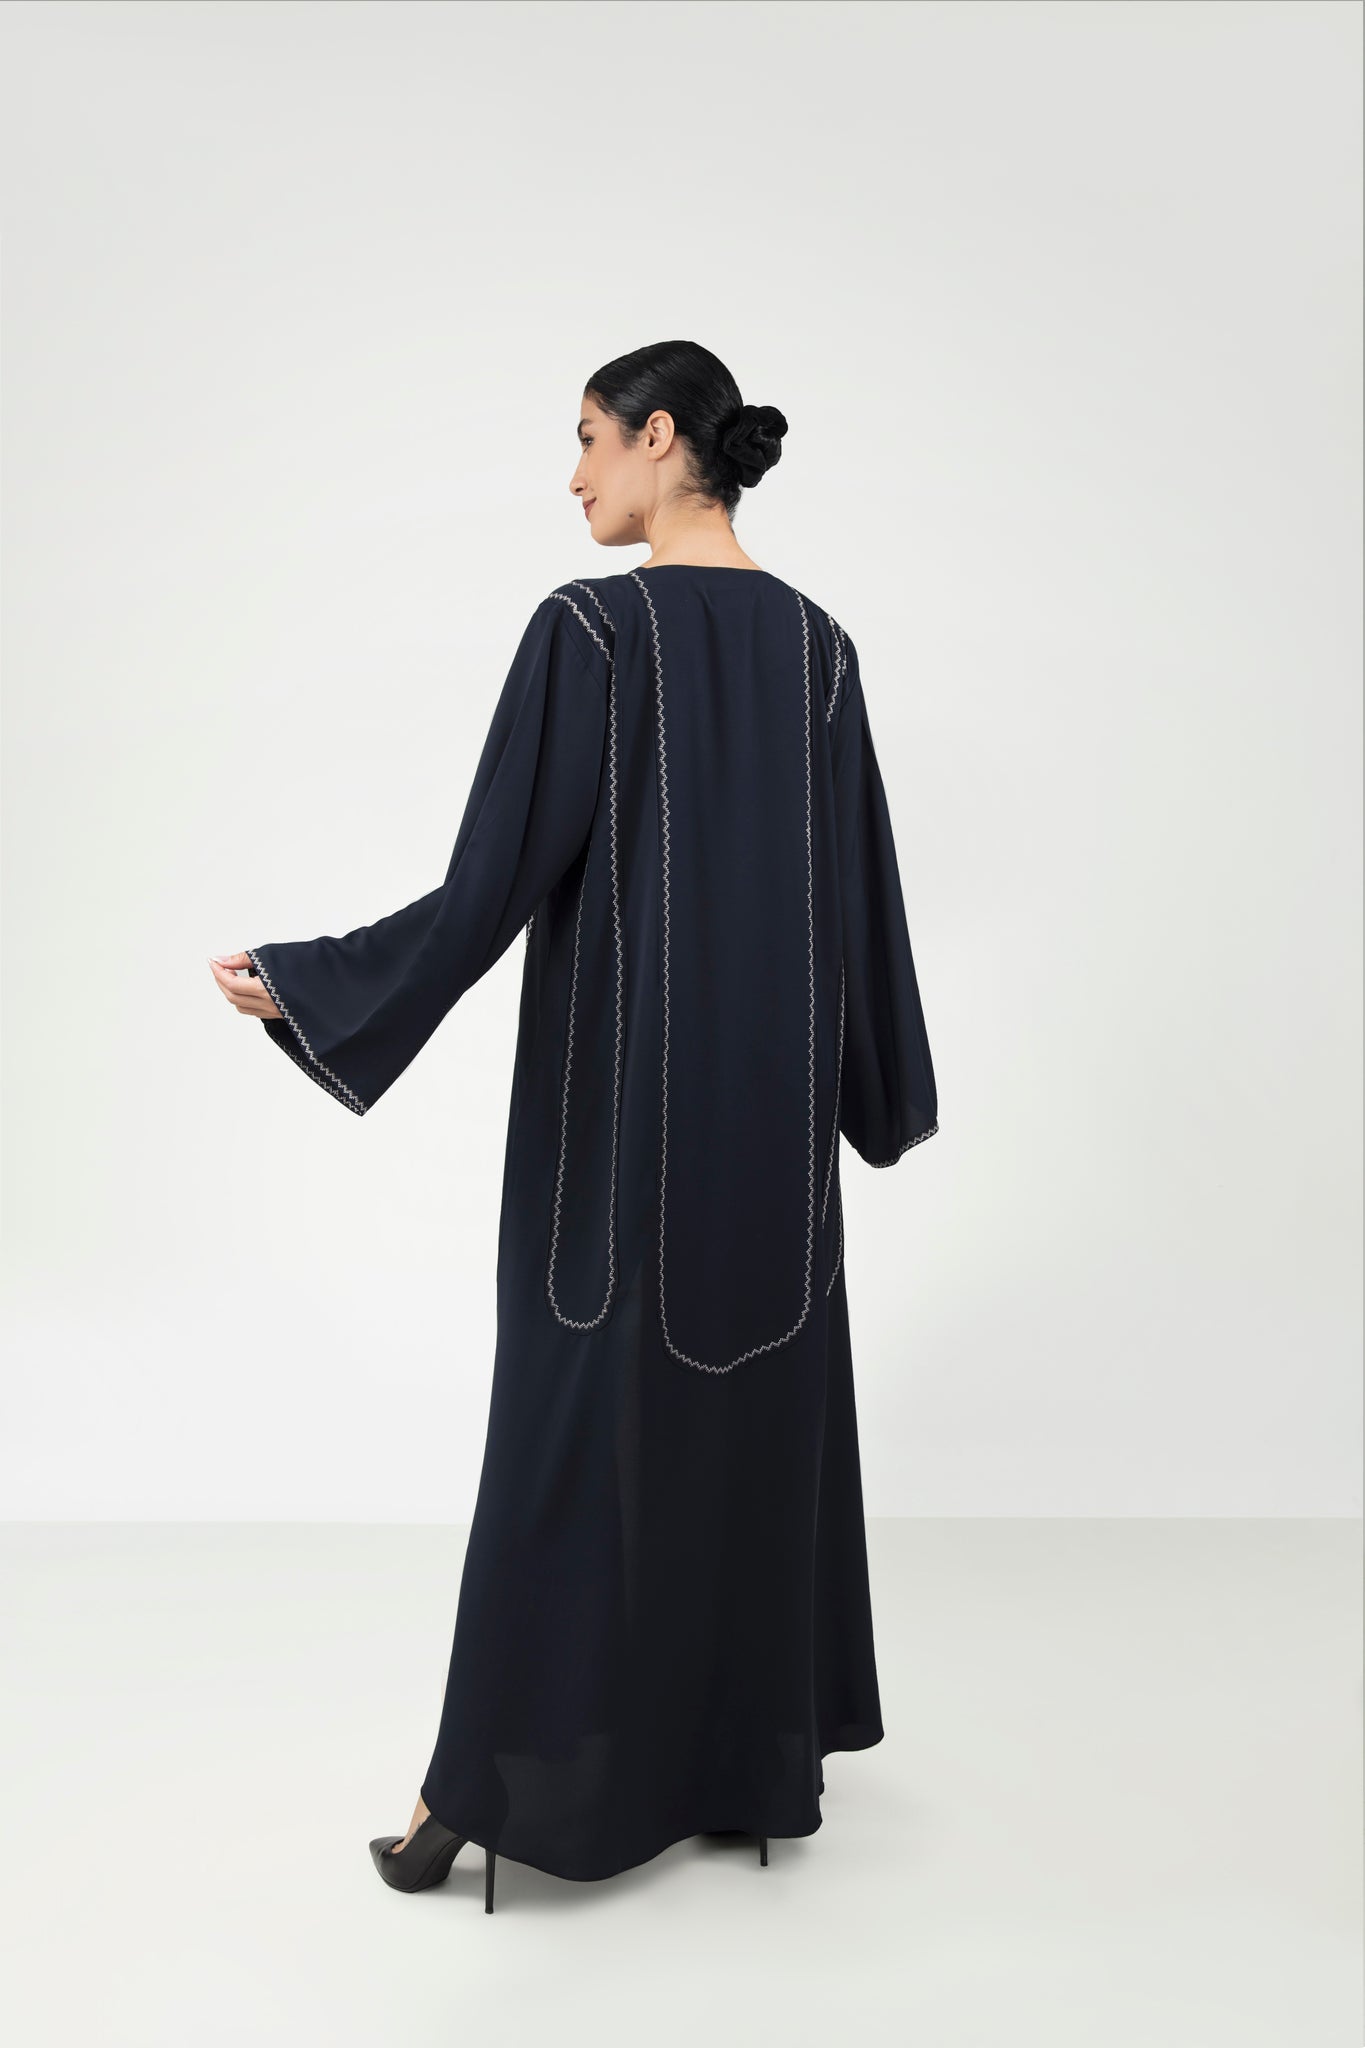 Buy Abaya Online - Women's Abayas UAE - Dubai Abaya Bentati Abaya